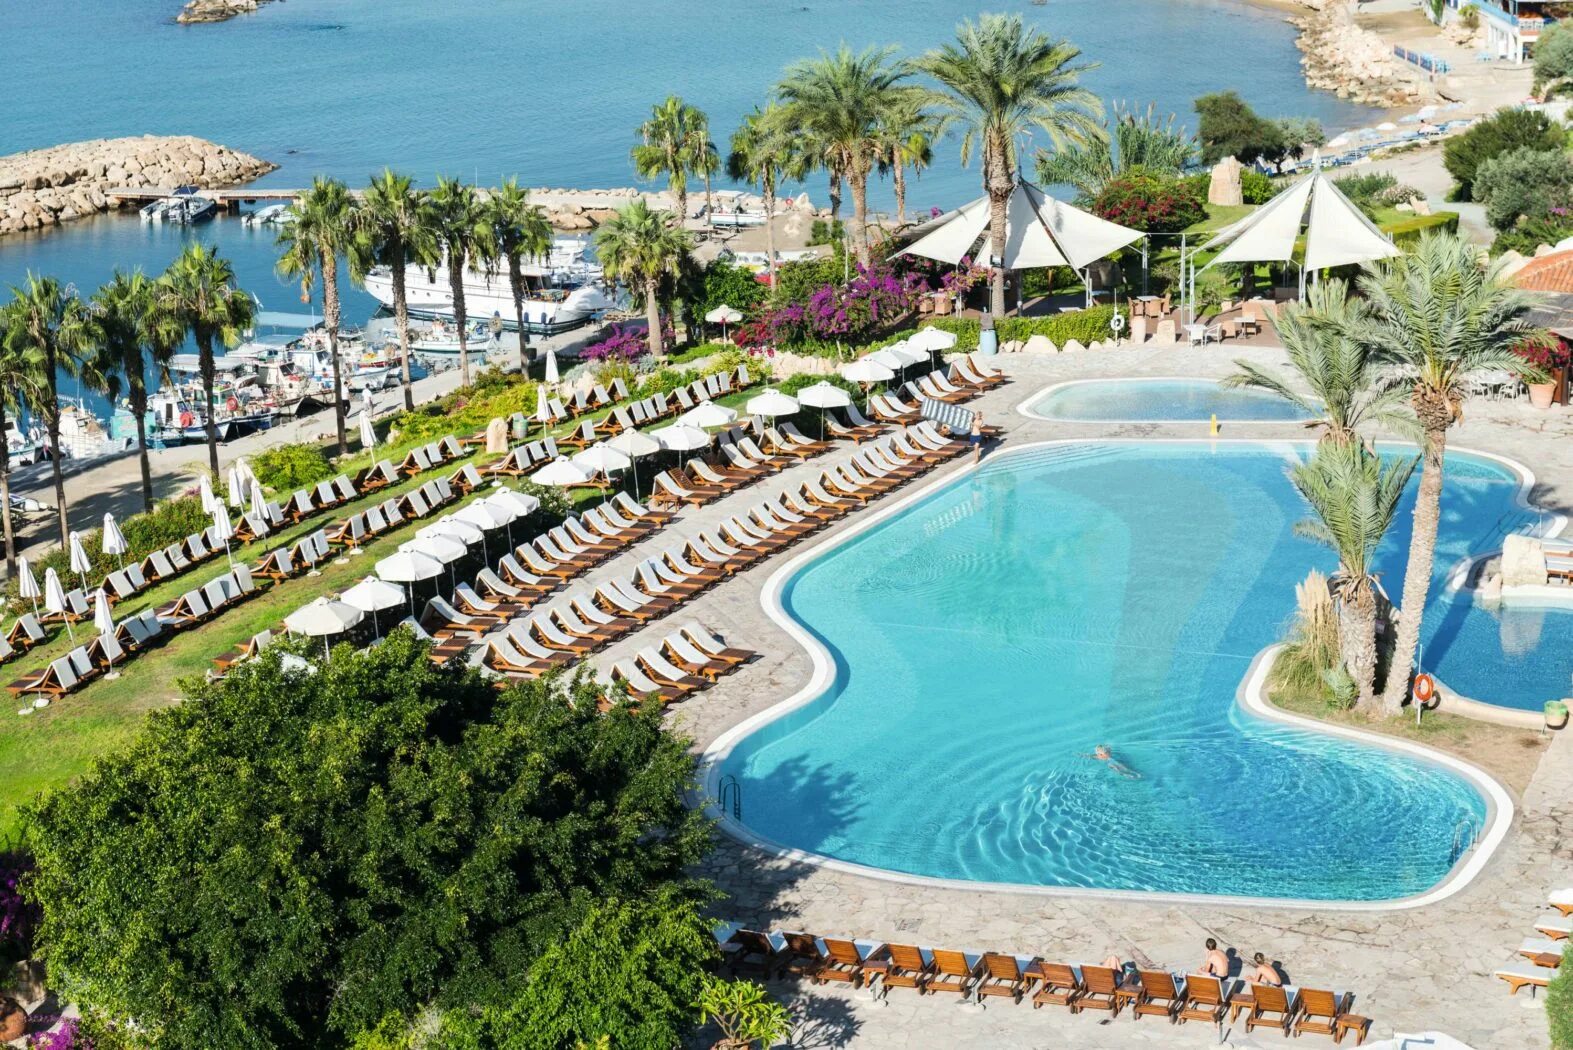 Coral Beach Hotel & Resort 5*. Кипр Корал Бич отель энд Резорт. Кипр отели 5 звезд. Coral beach hotel resort